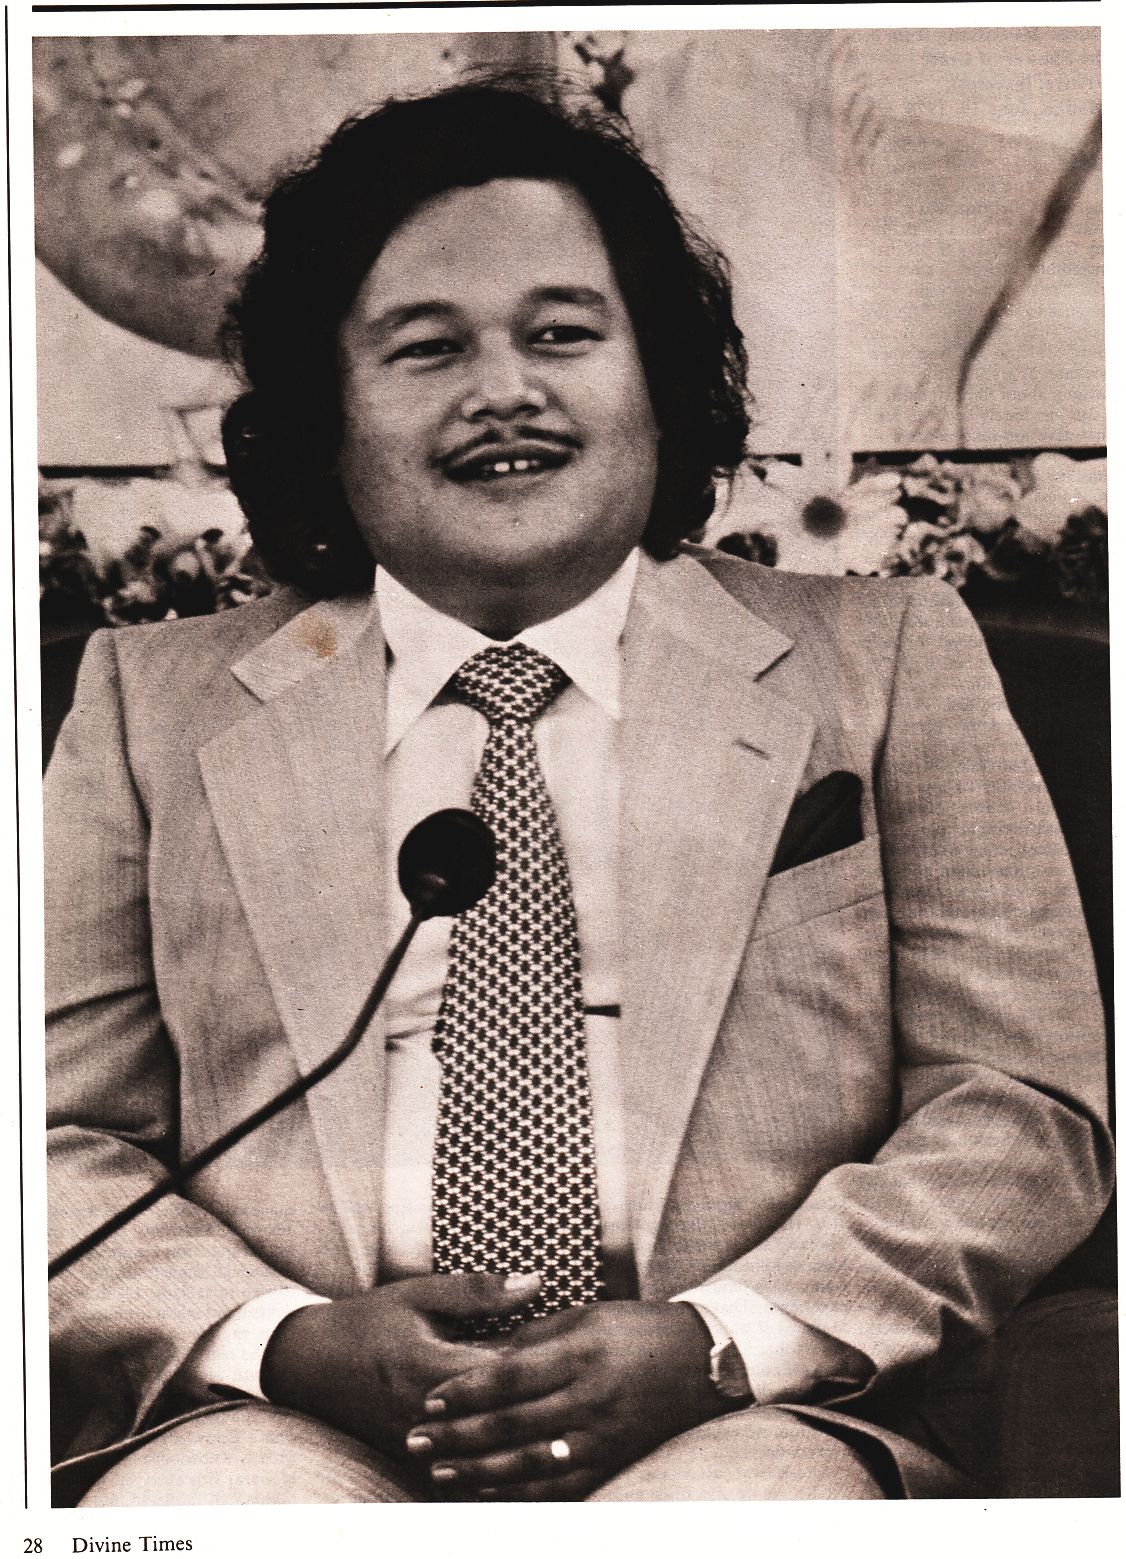 The Satguru or Perfect Master, Prem Rawat (Maharaji) 1978